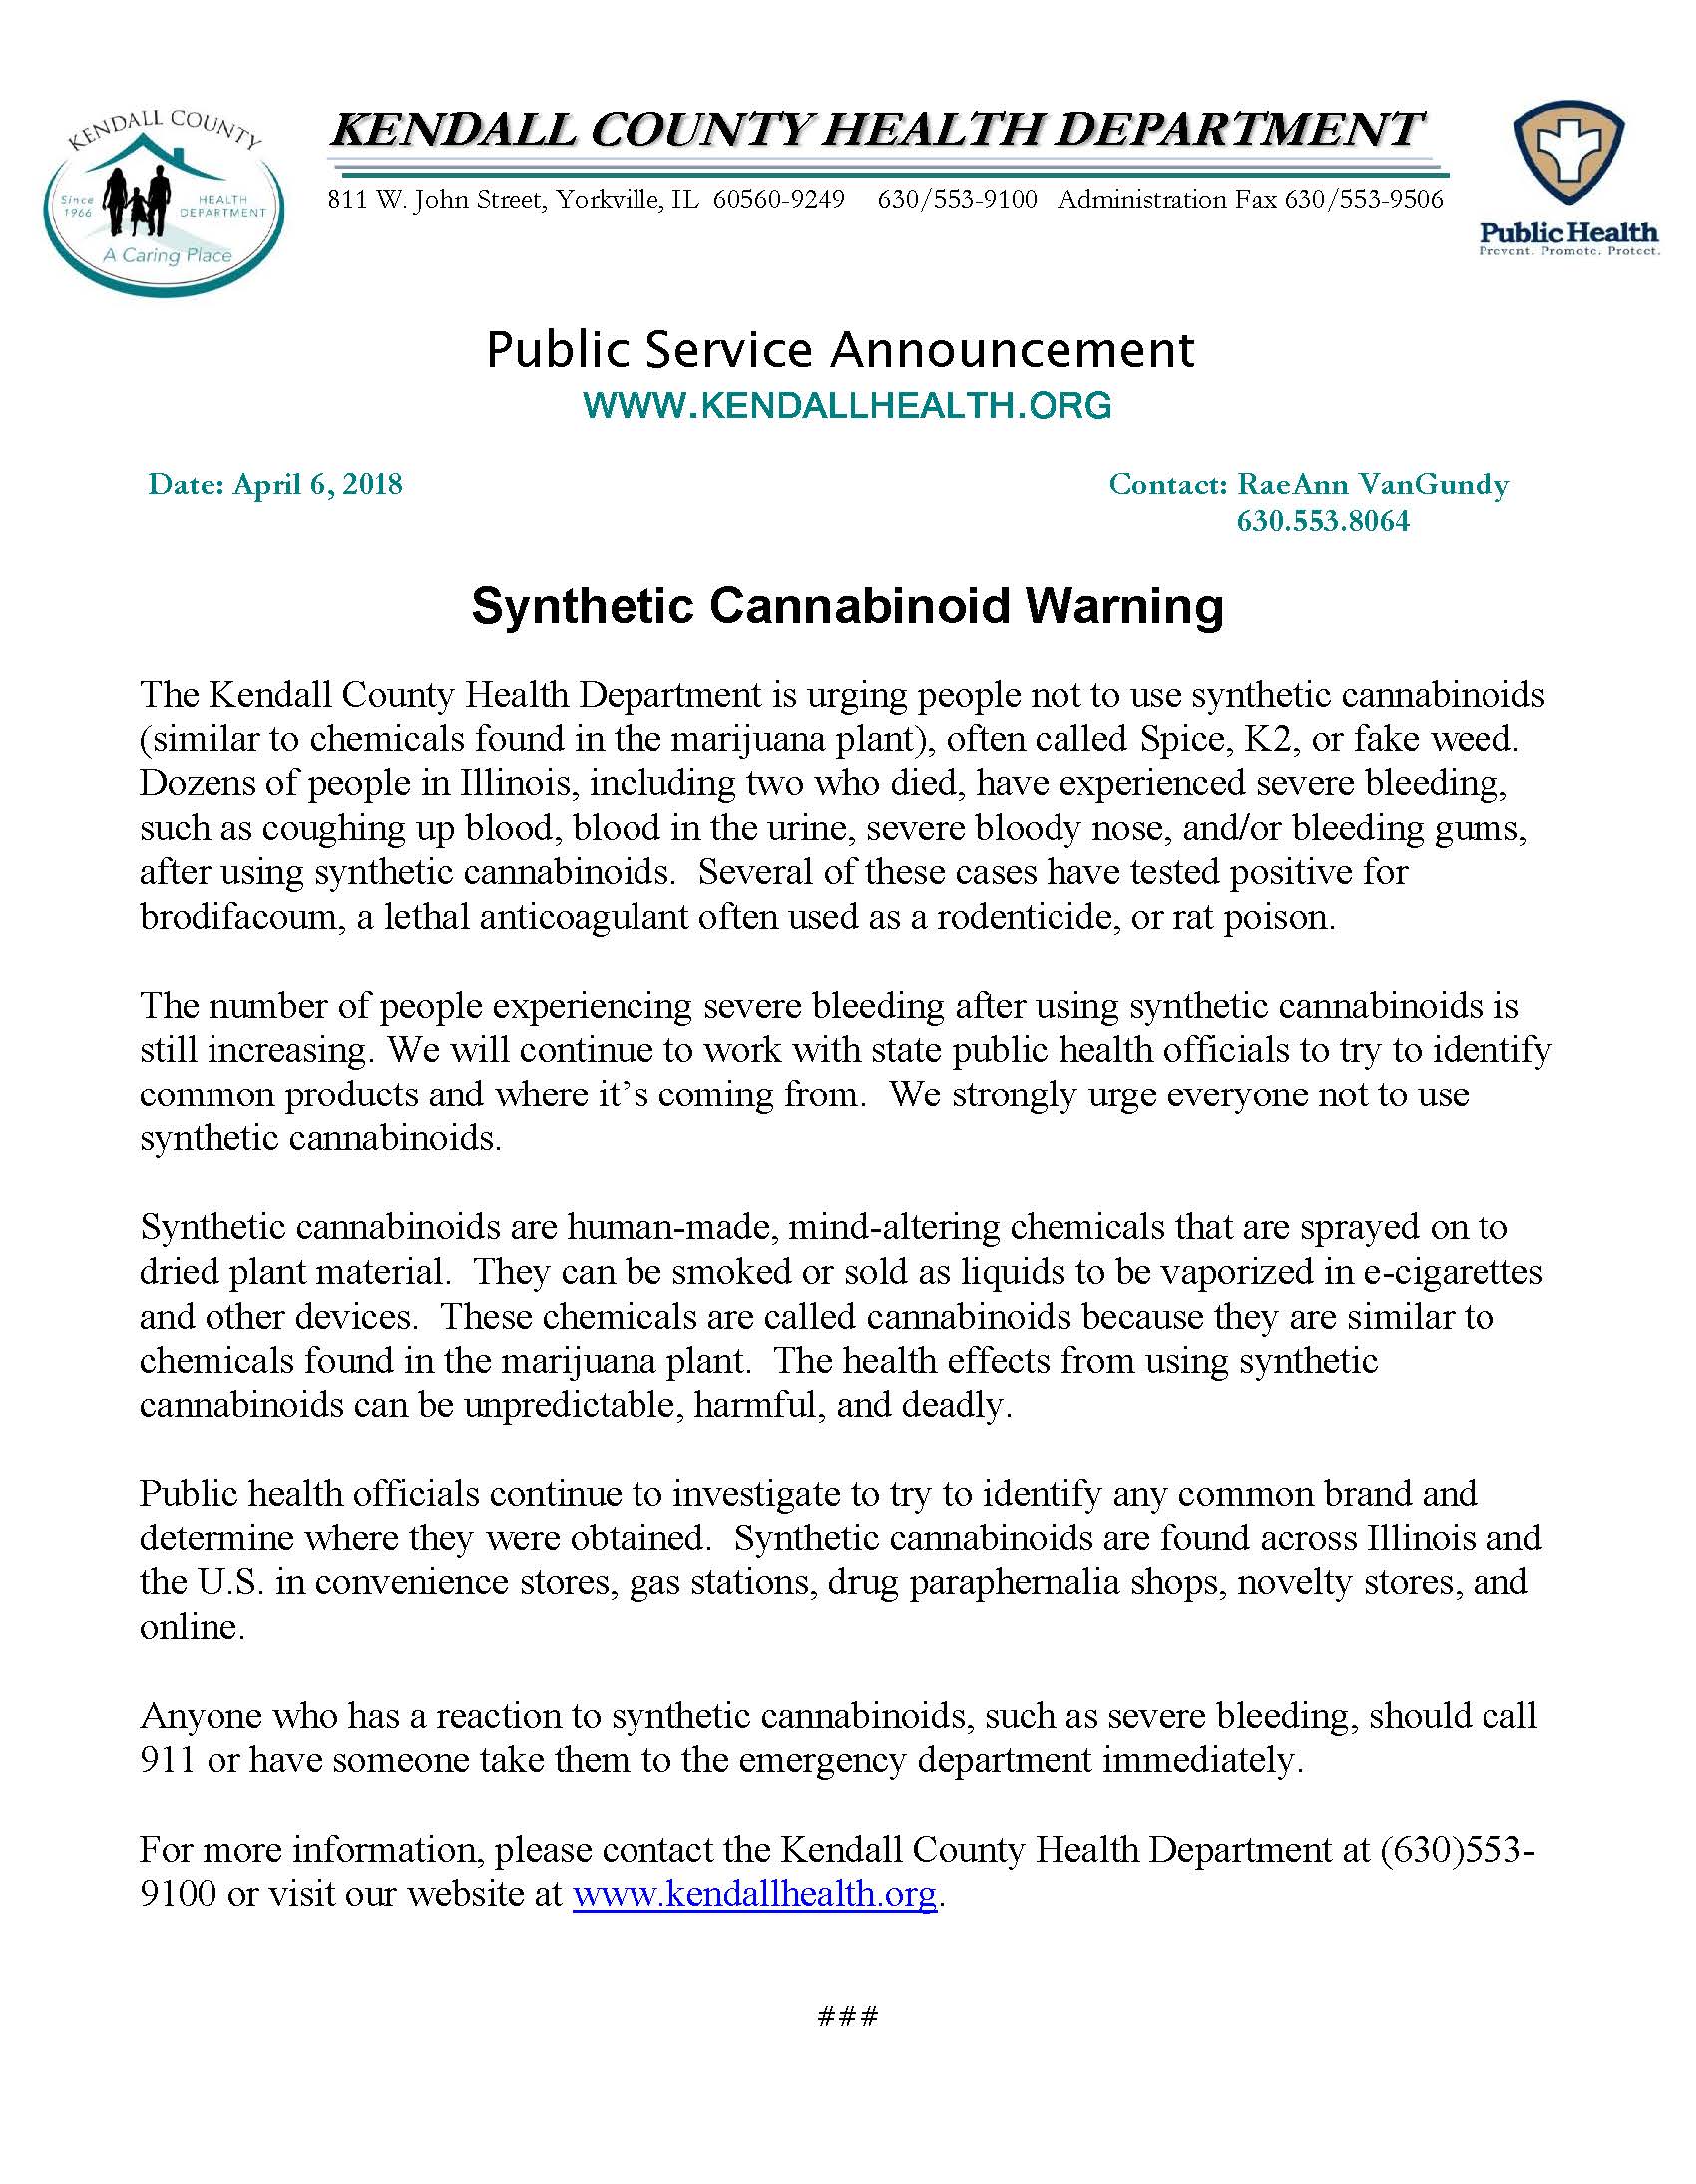 PSA Synthetic Cannabinoid 4.18